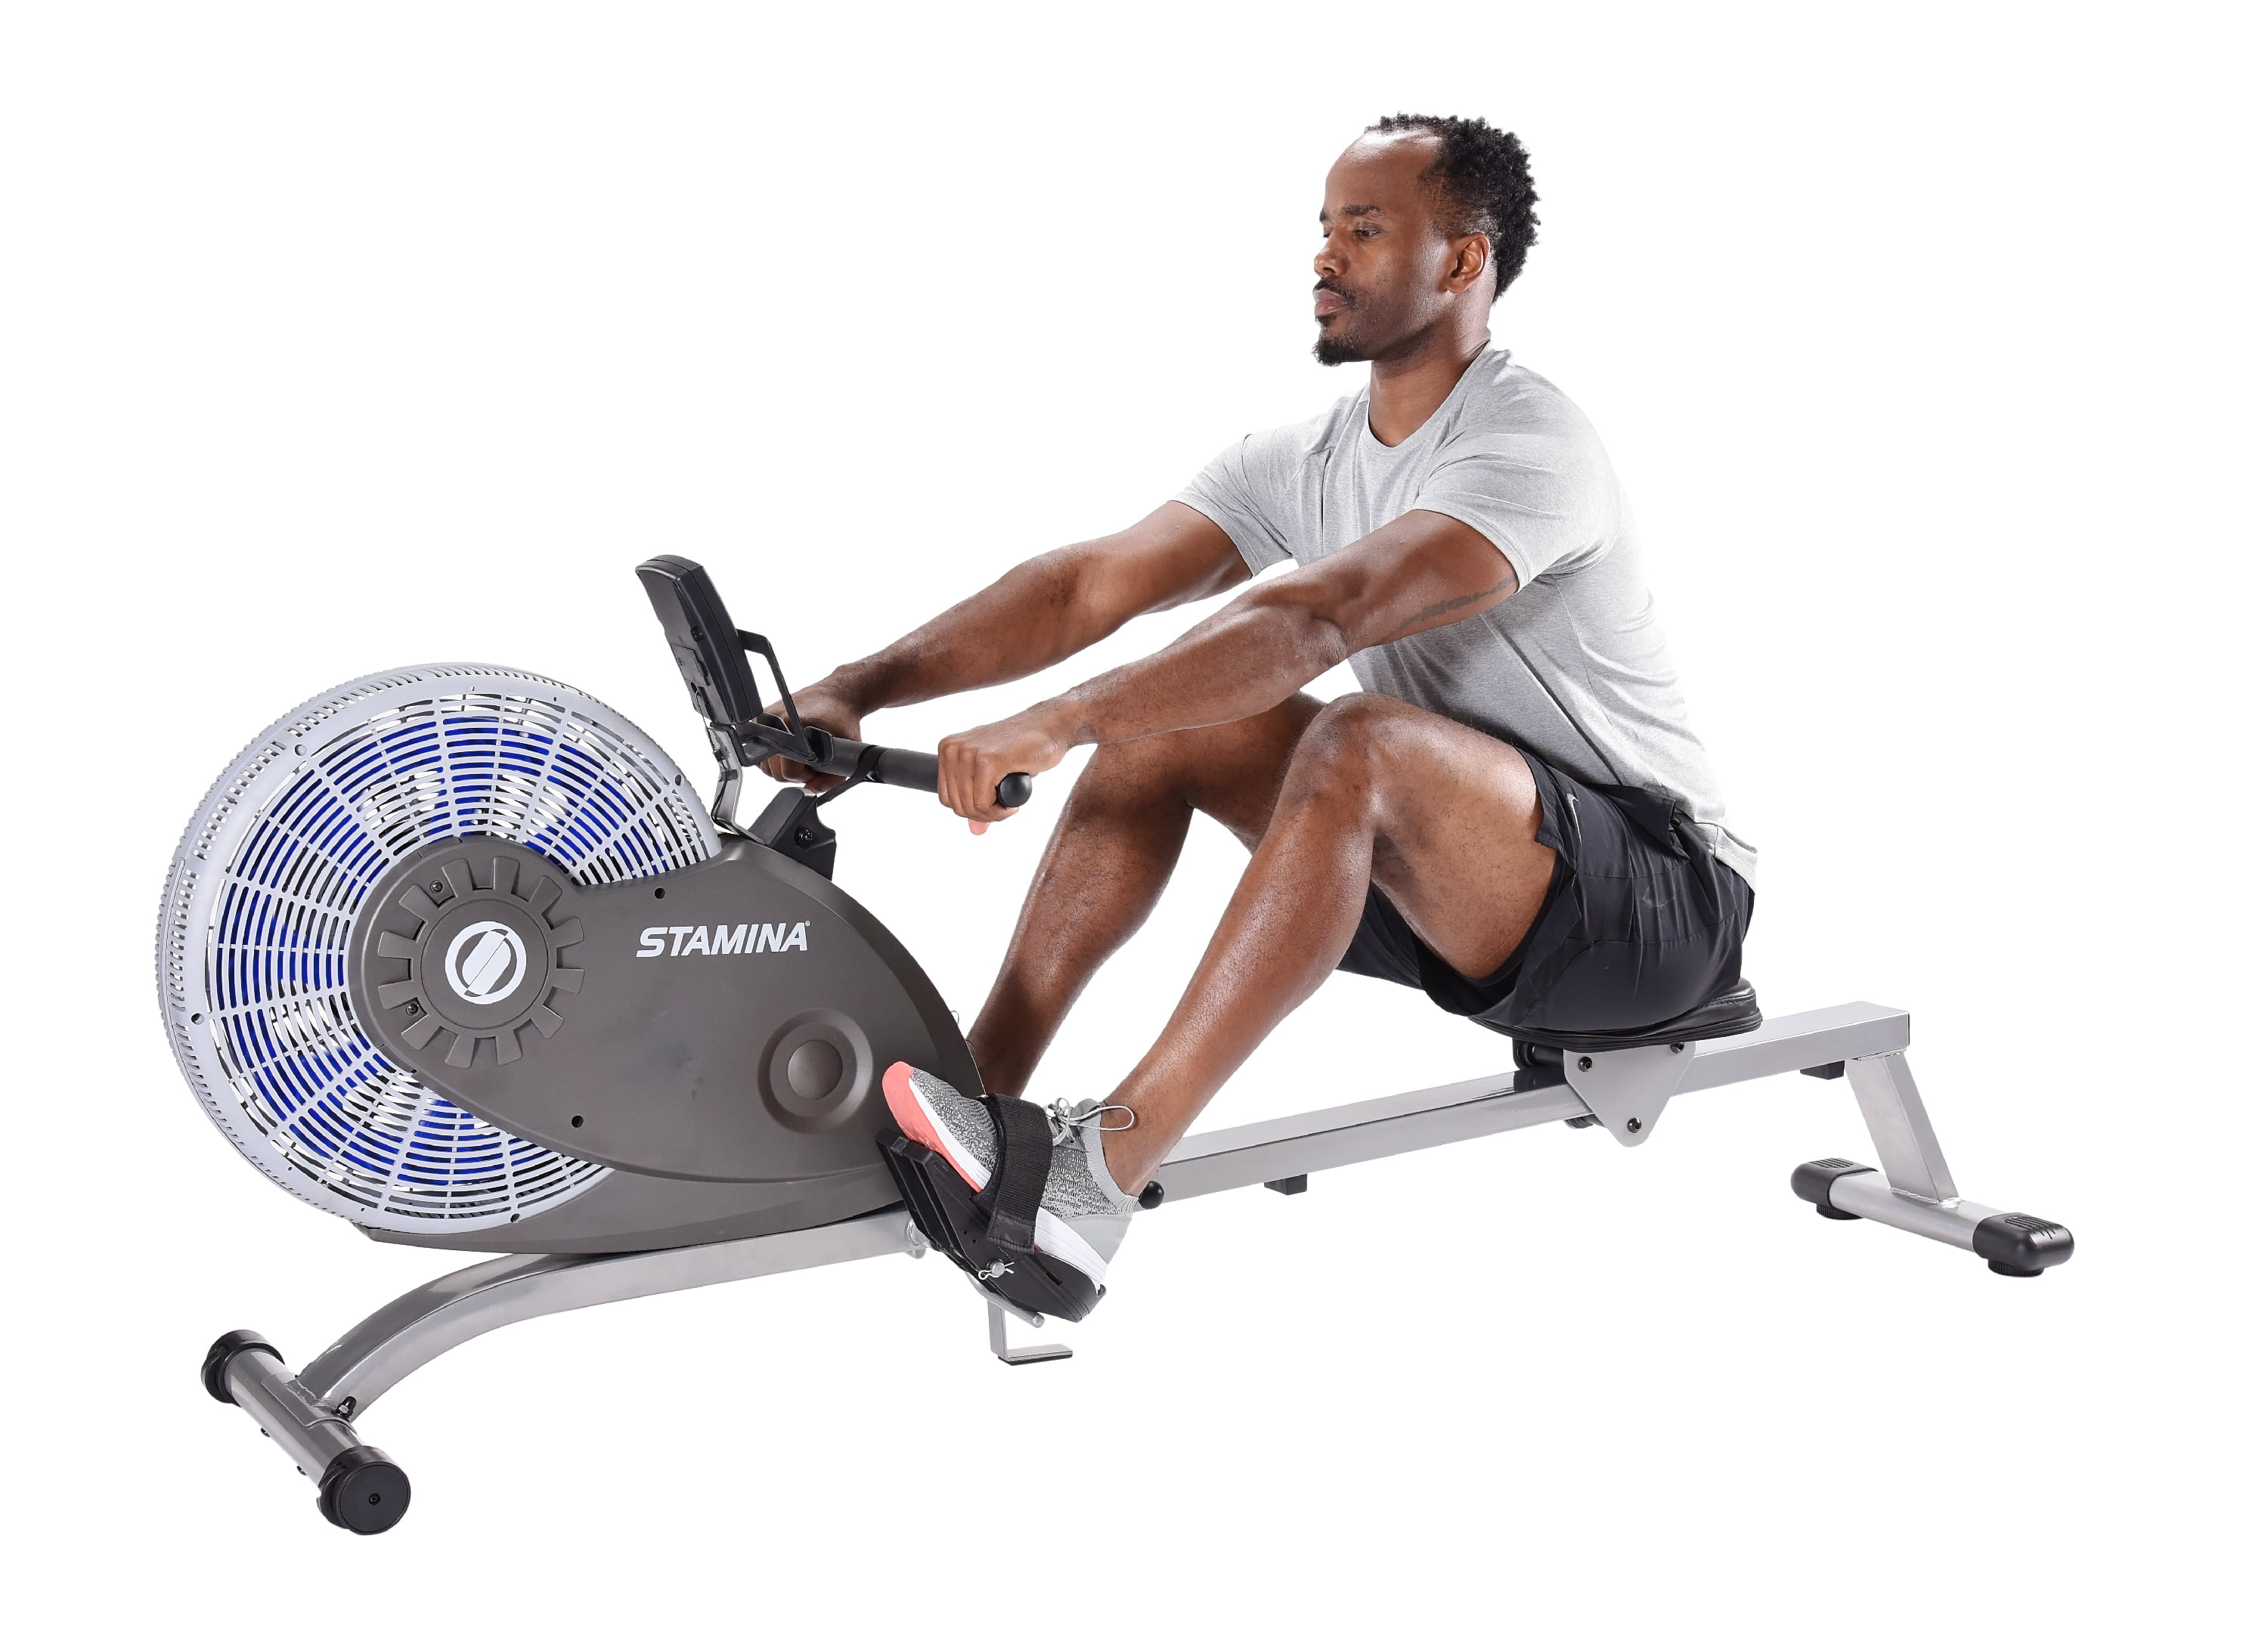 Better stamina. Изокинетический тренажер super Mini-Gym. Горизонтальный велотренажер Atlas rower Cardio. Stamina.